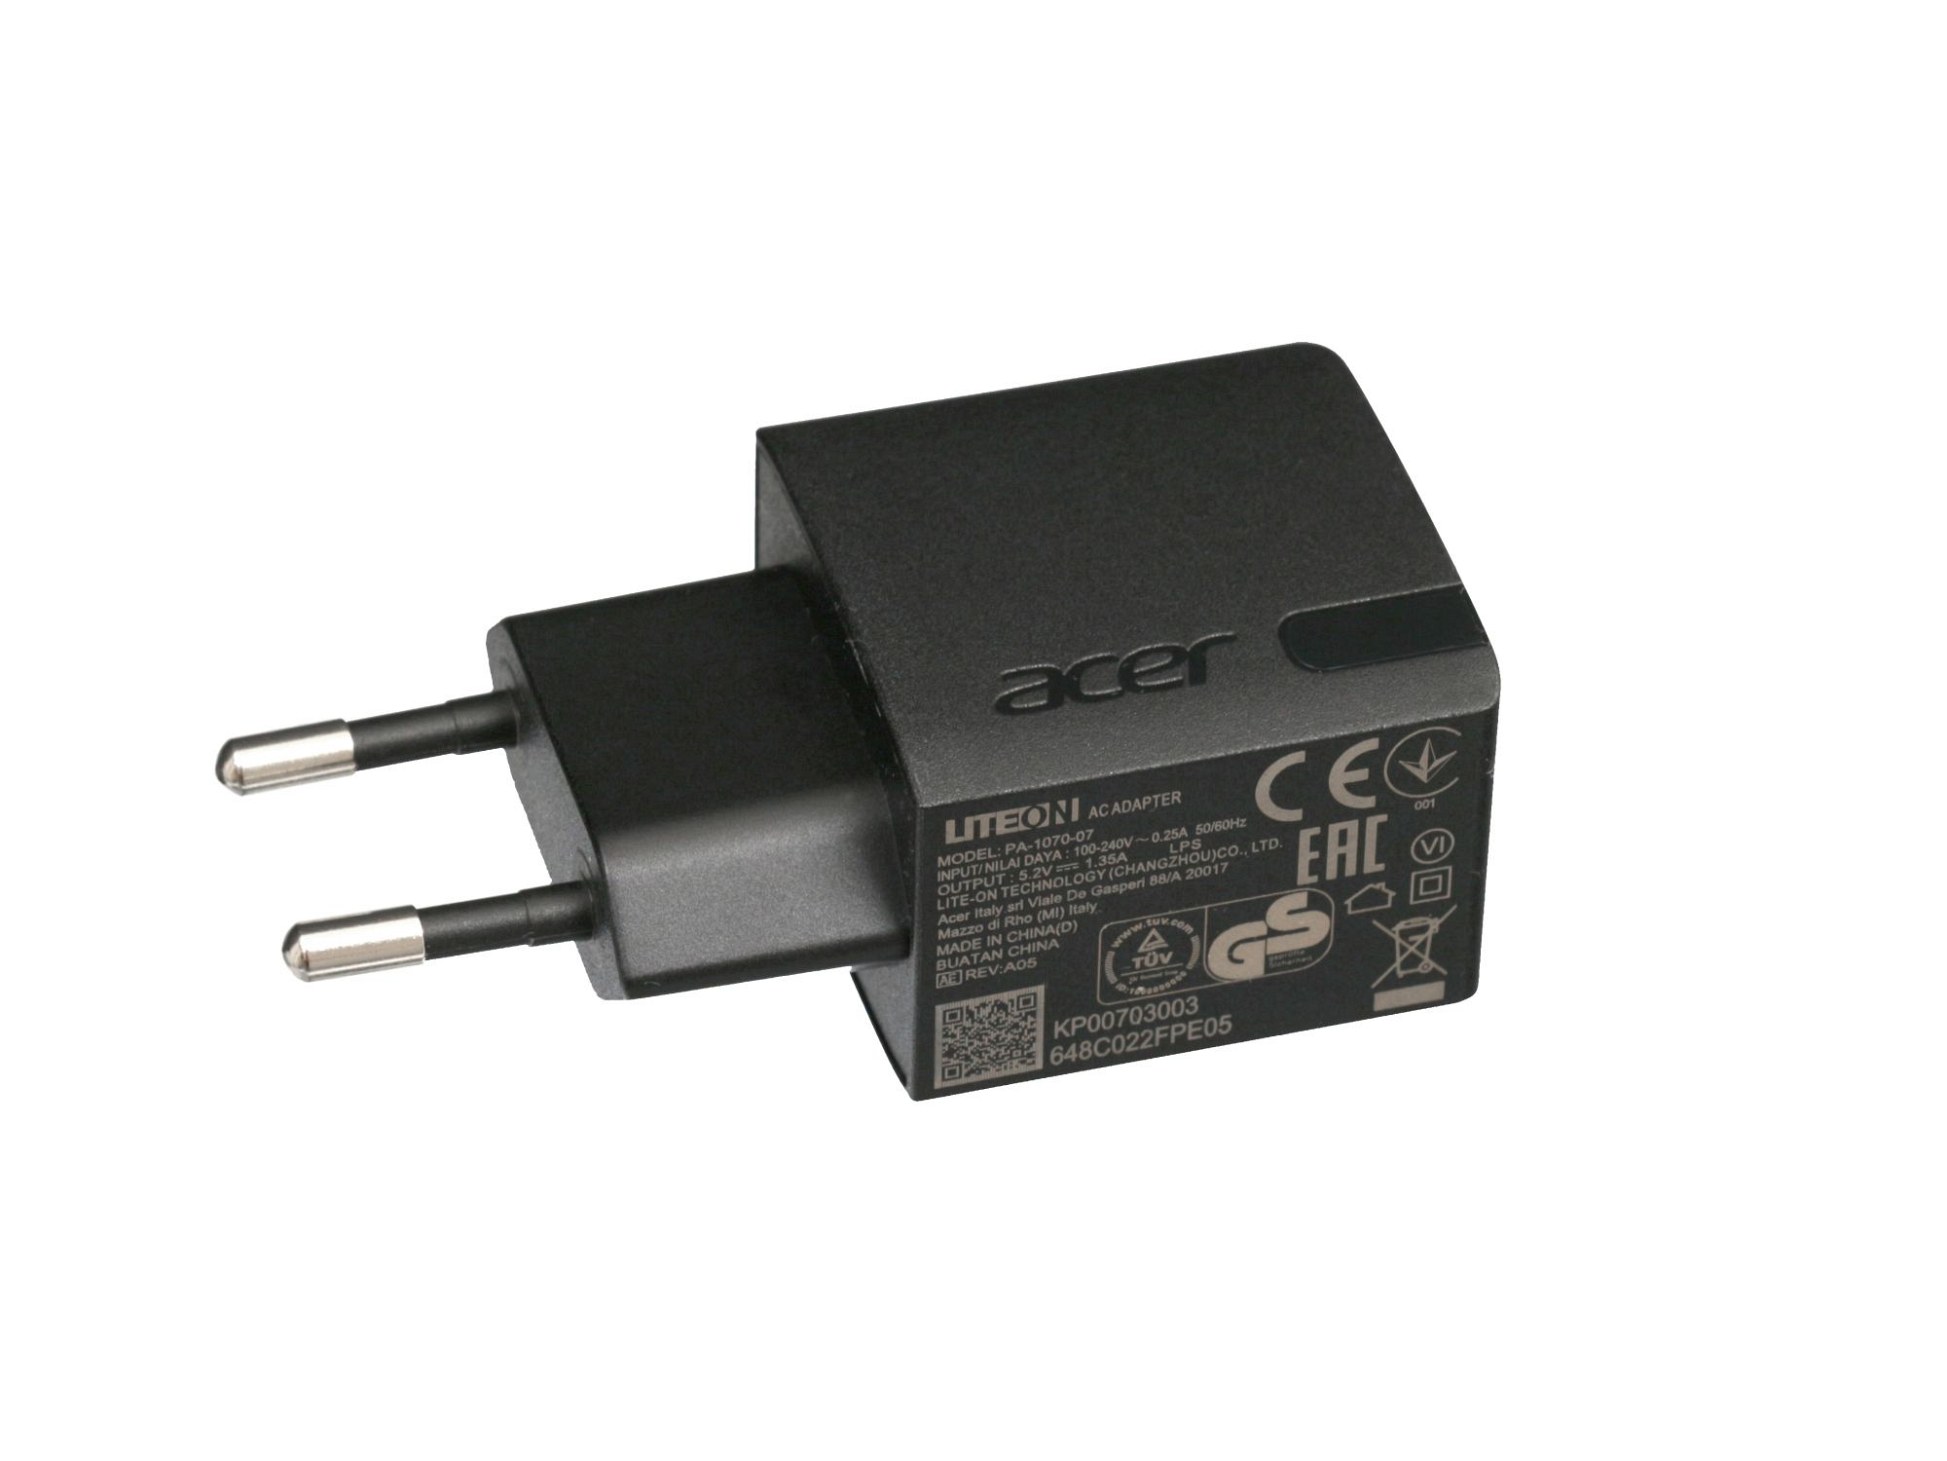 USB Netzteil 7 Watt EU Wallplug für Acer Iconia B1-721